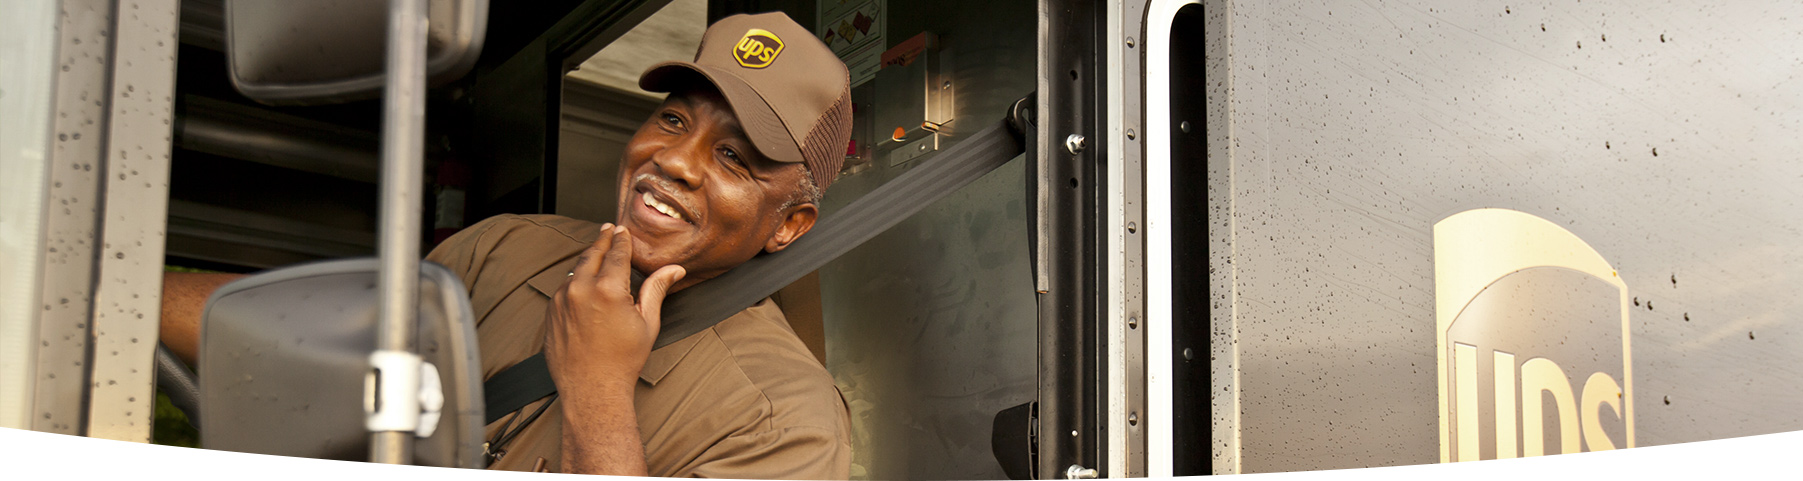 UPS driver smiling.